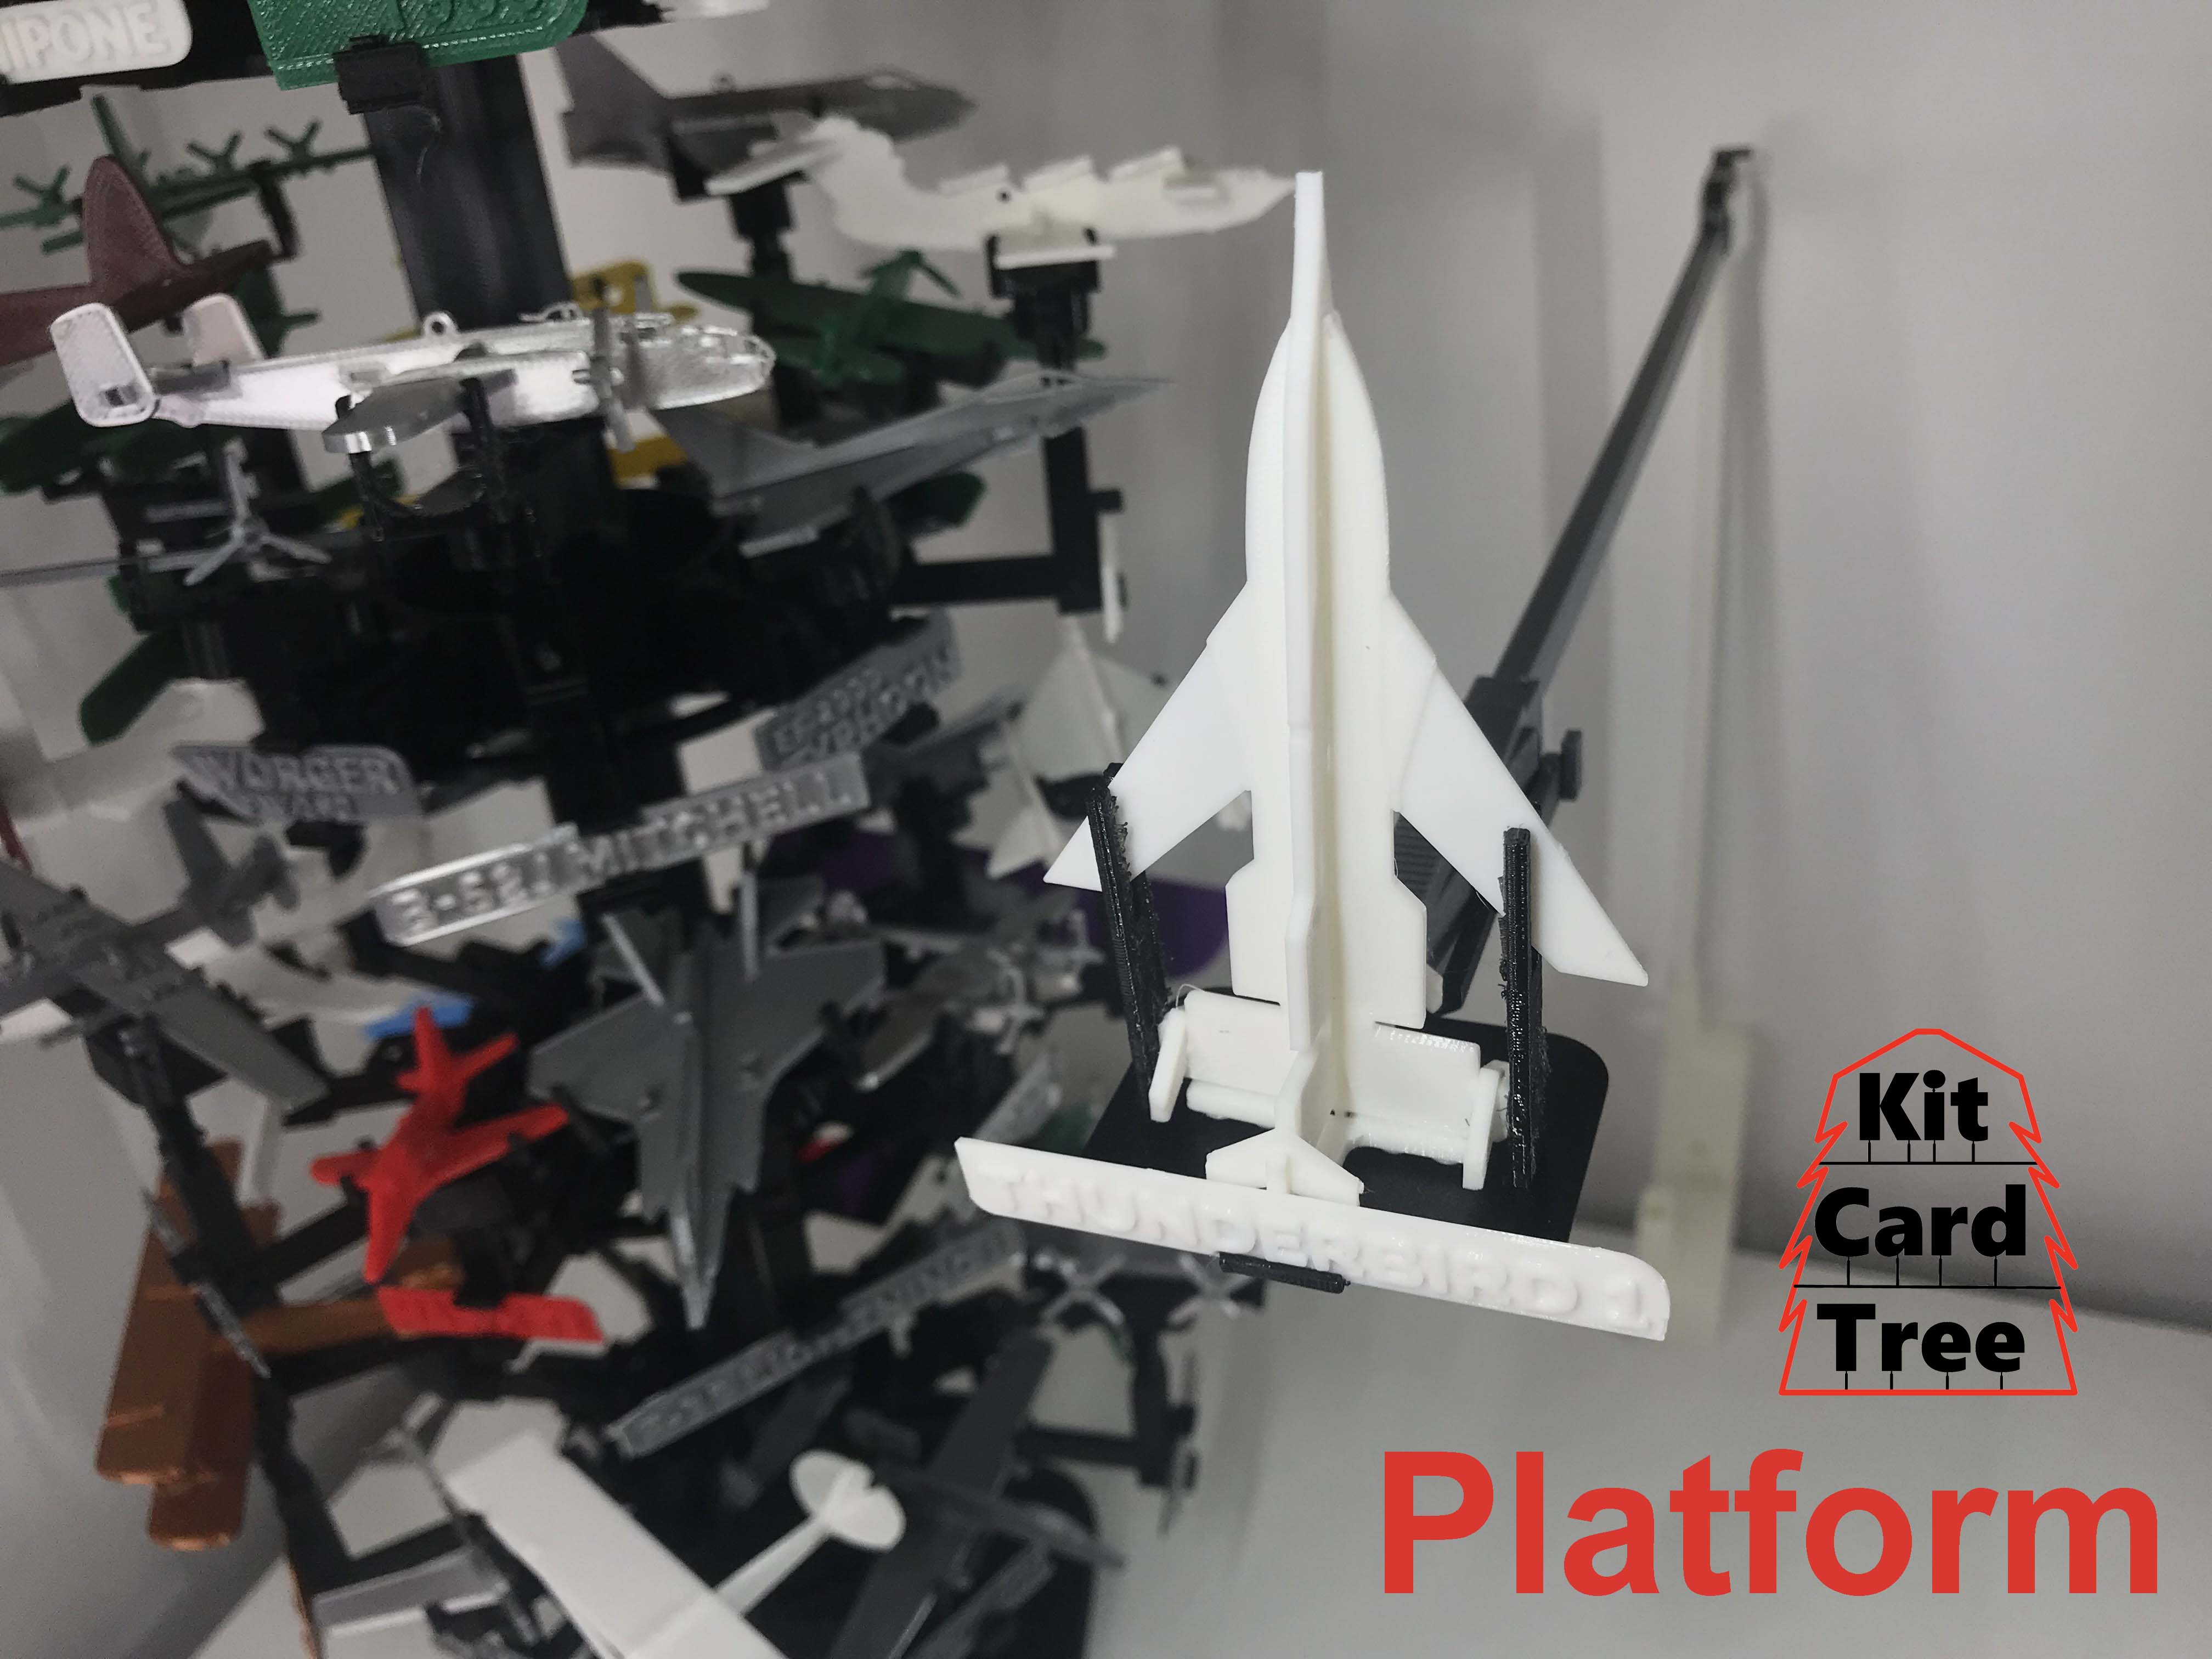 Kit Card Tree platform for Thunderbird 1 by Nakozen